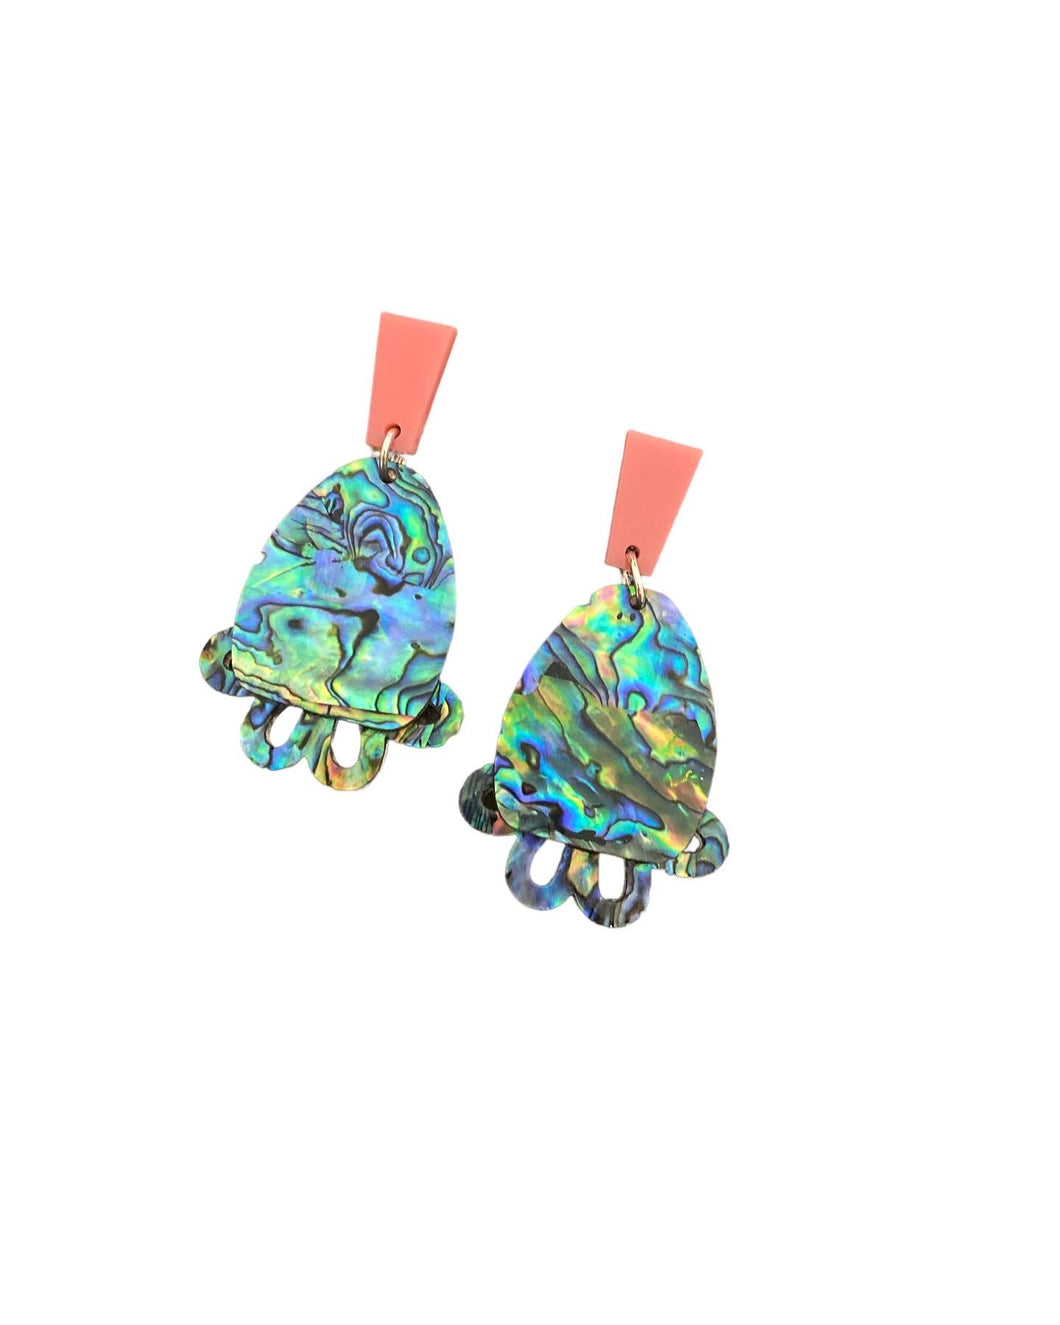 Abalone Jelly Fish Earrings